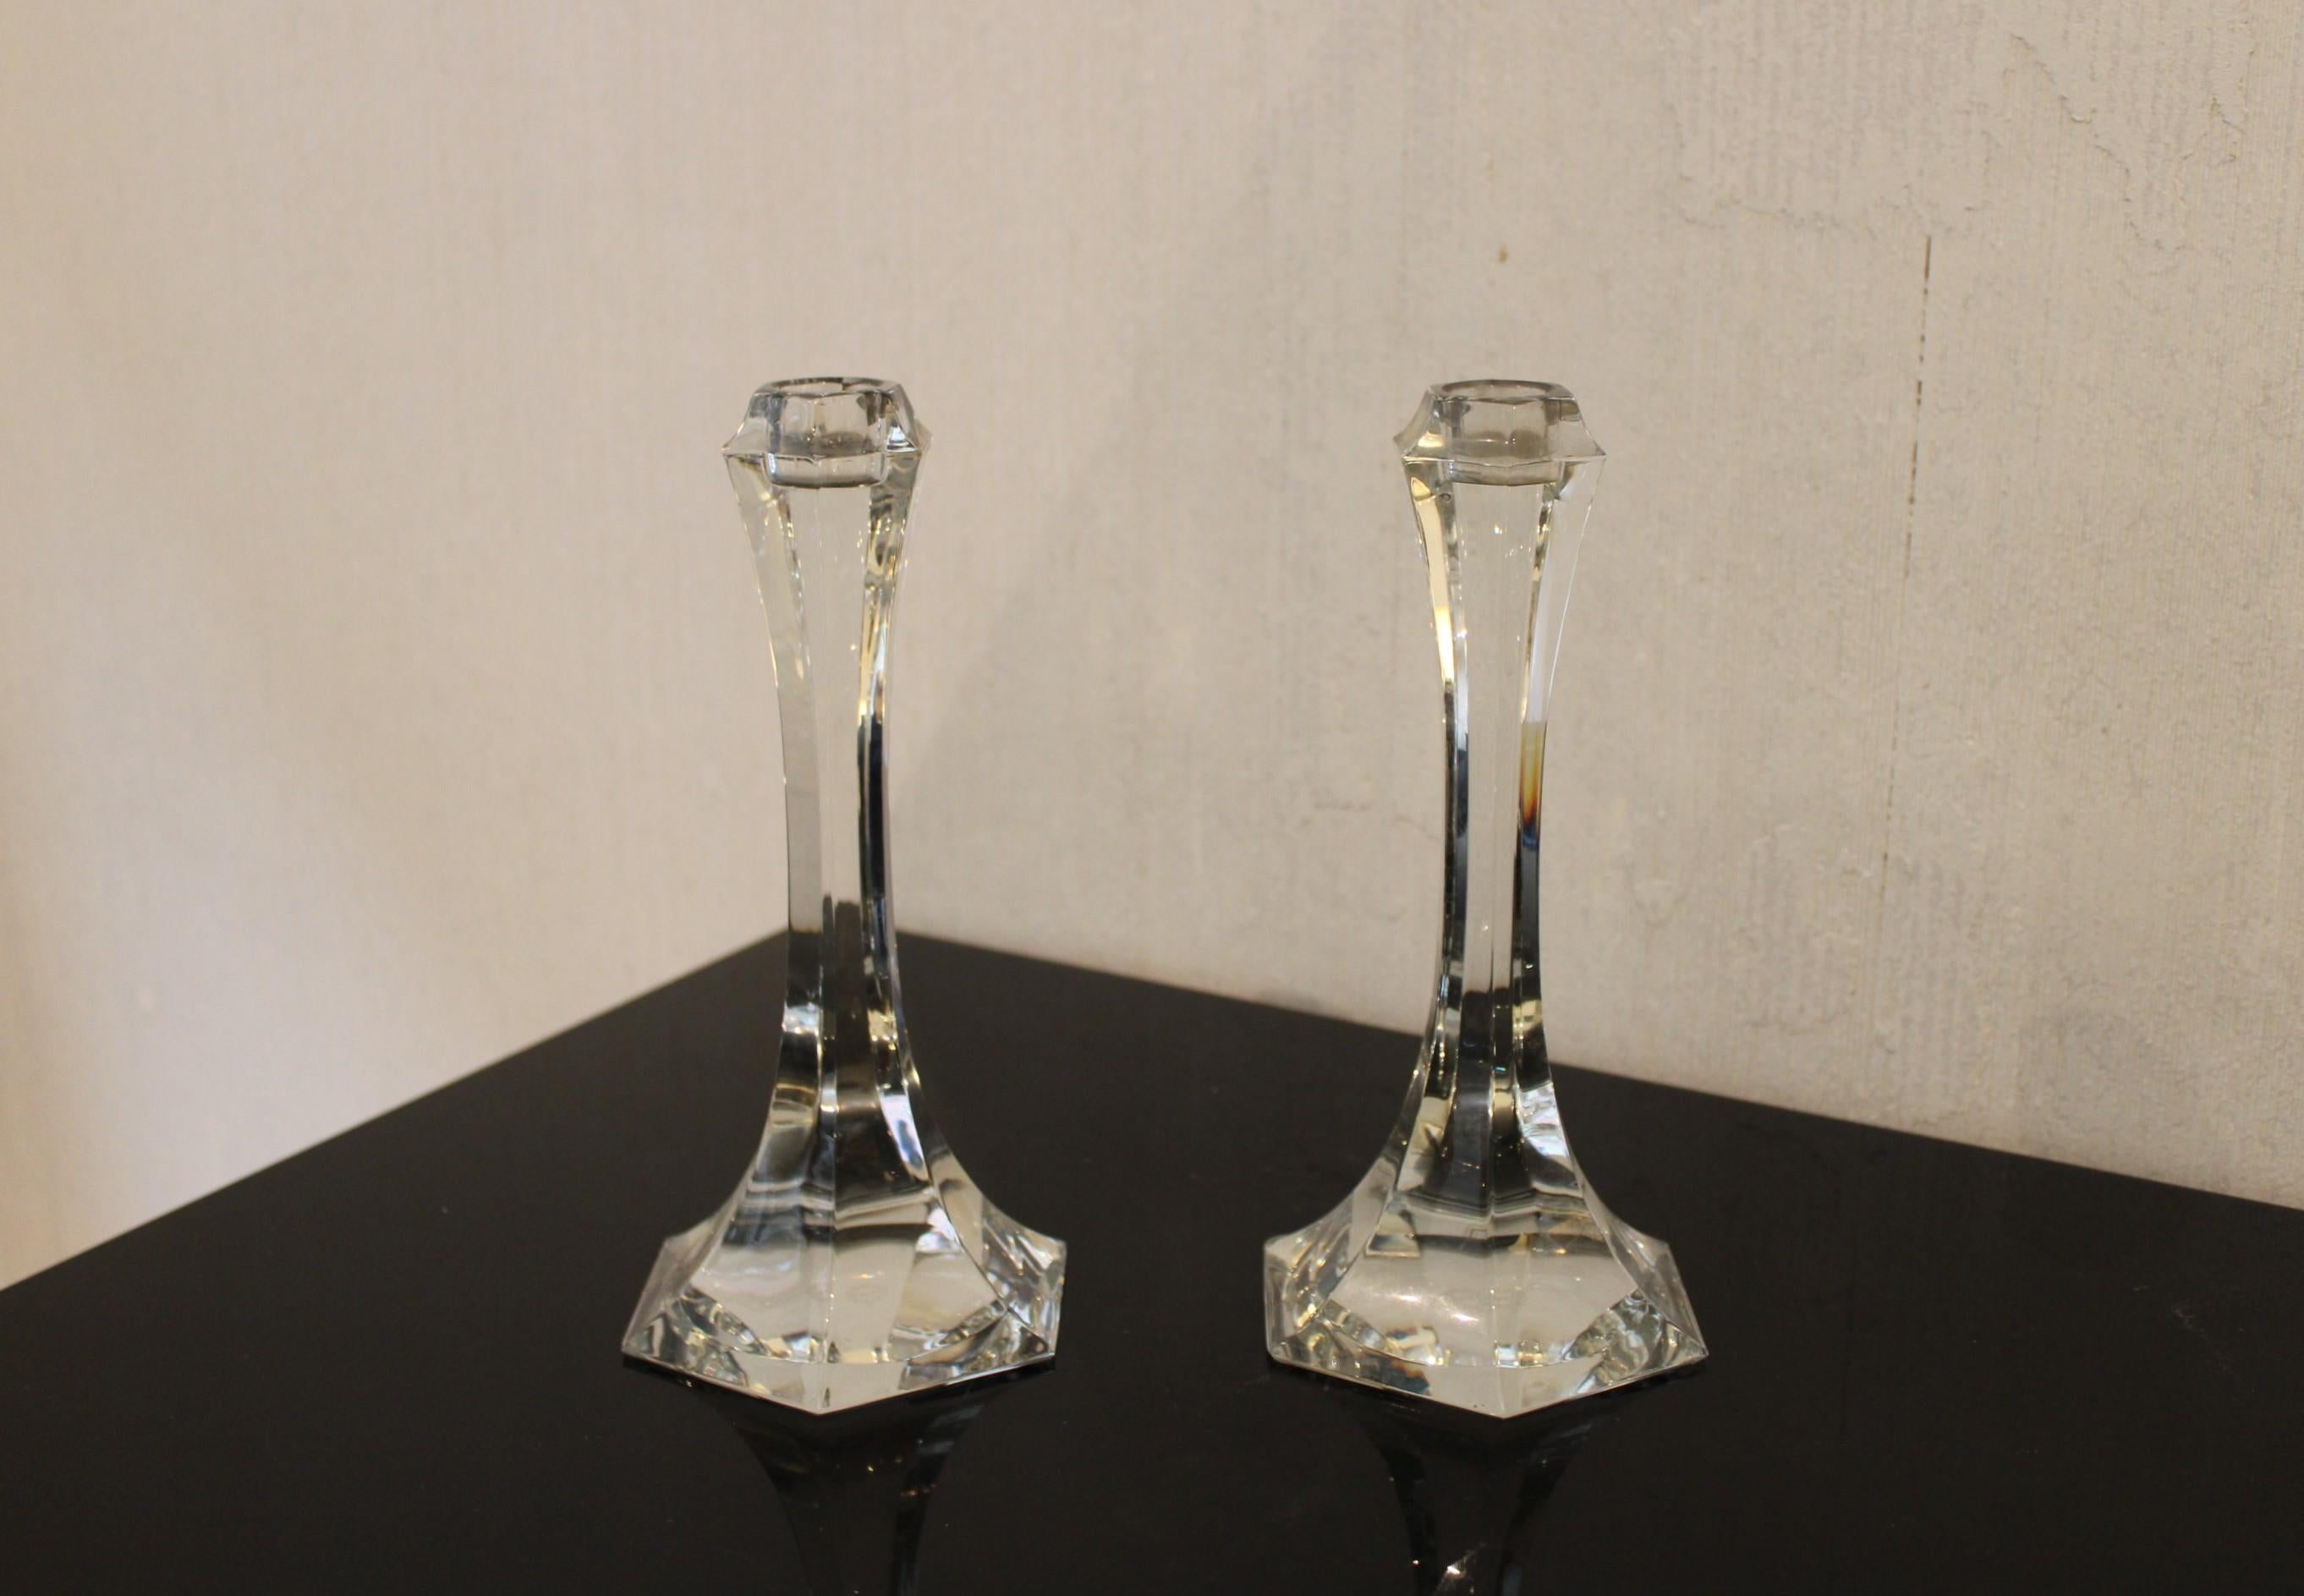 Pair of crystal candlesticks, model Vega
Mark Saint Louis
France, 20th century.